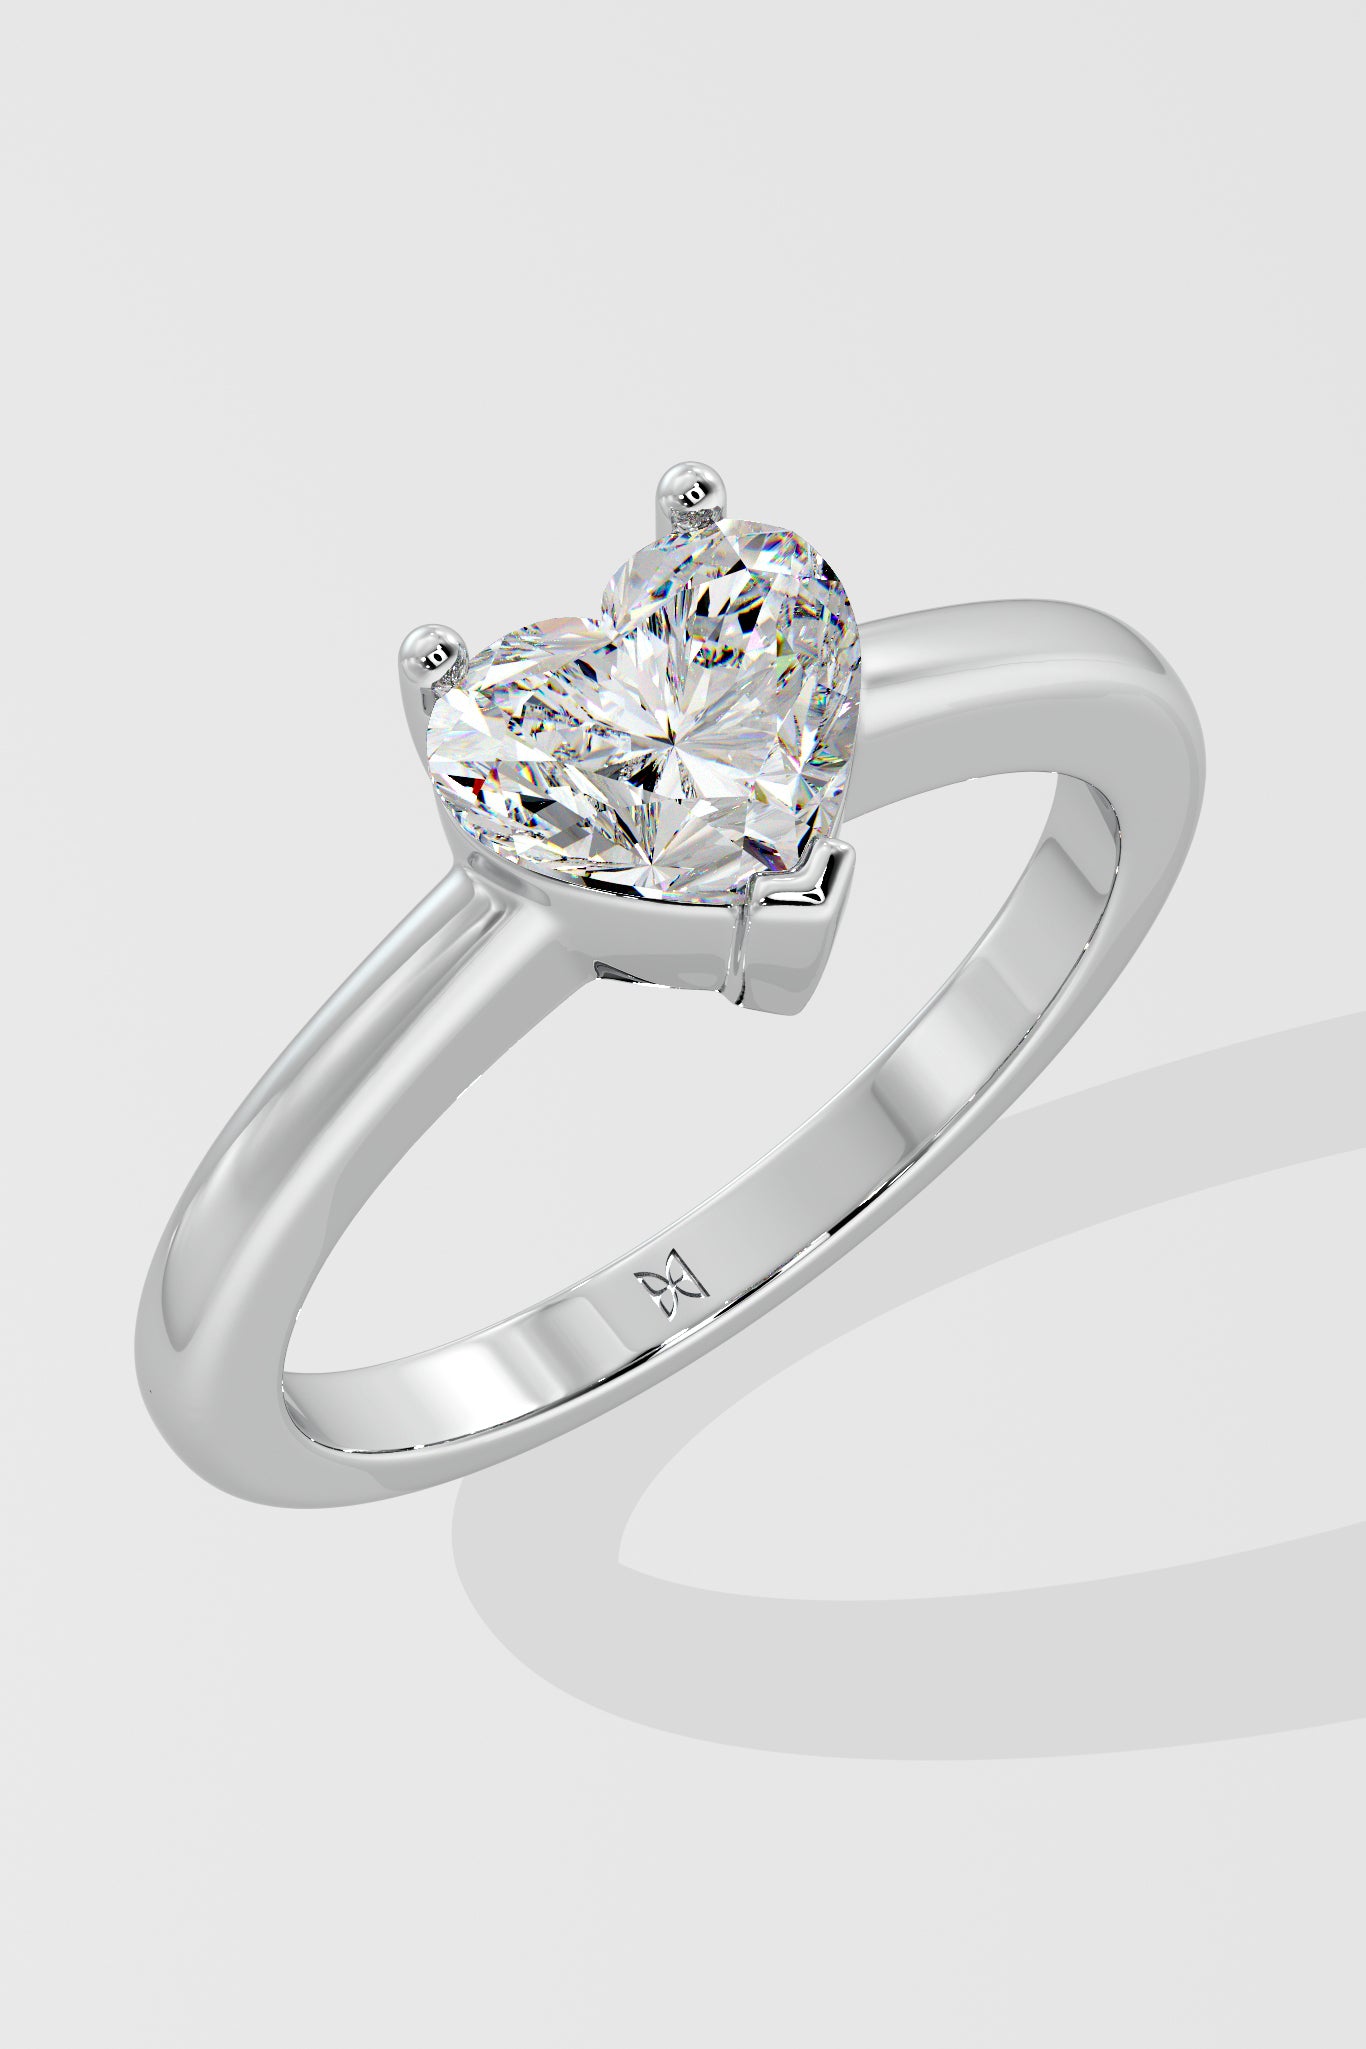 Grey Diamond Engagement Ring in Rose Gold Vintage Style Floral Ring | La  More Design